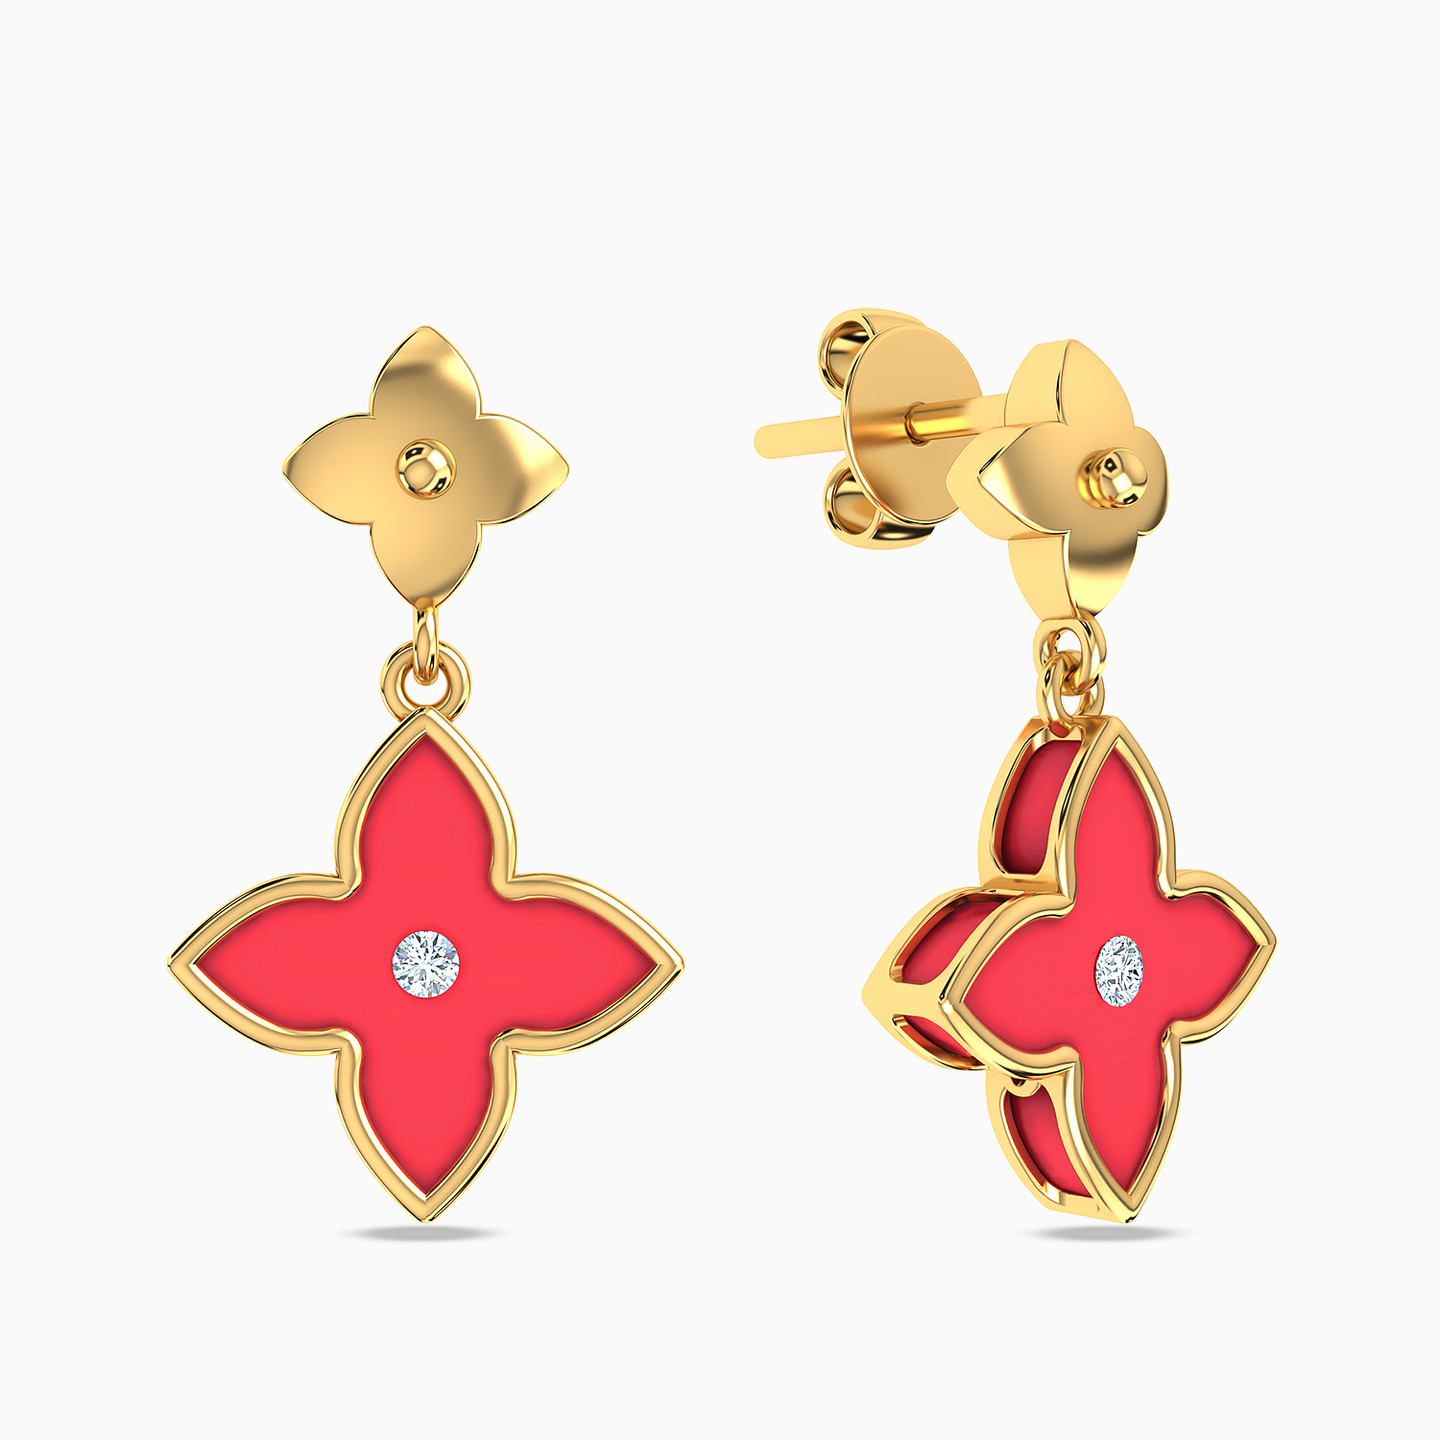 18K Gold Colored Stones Drop Earrings